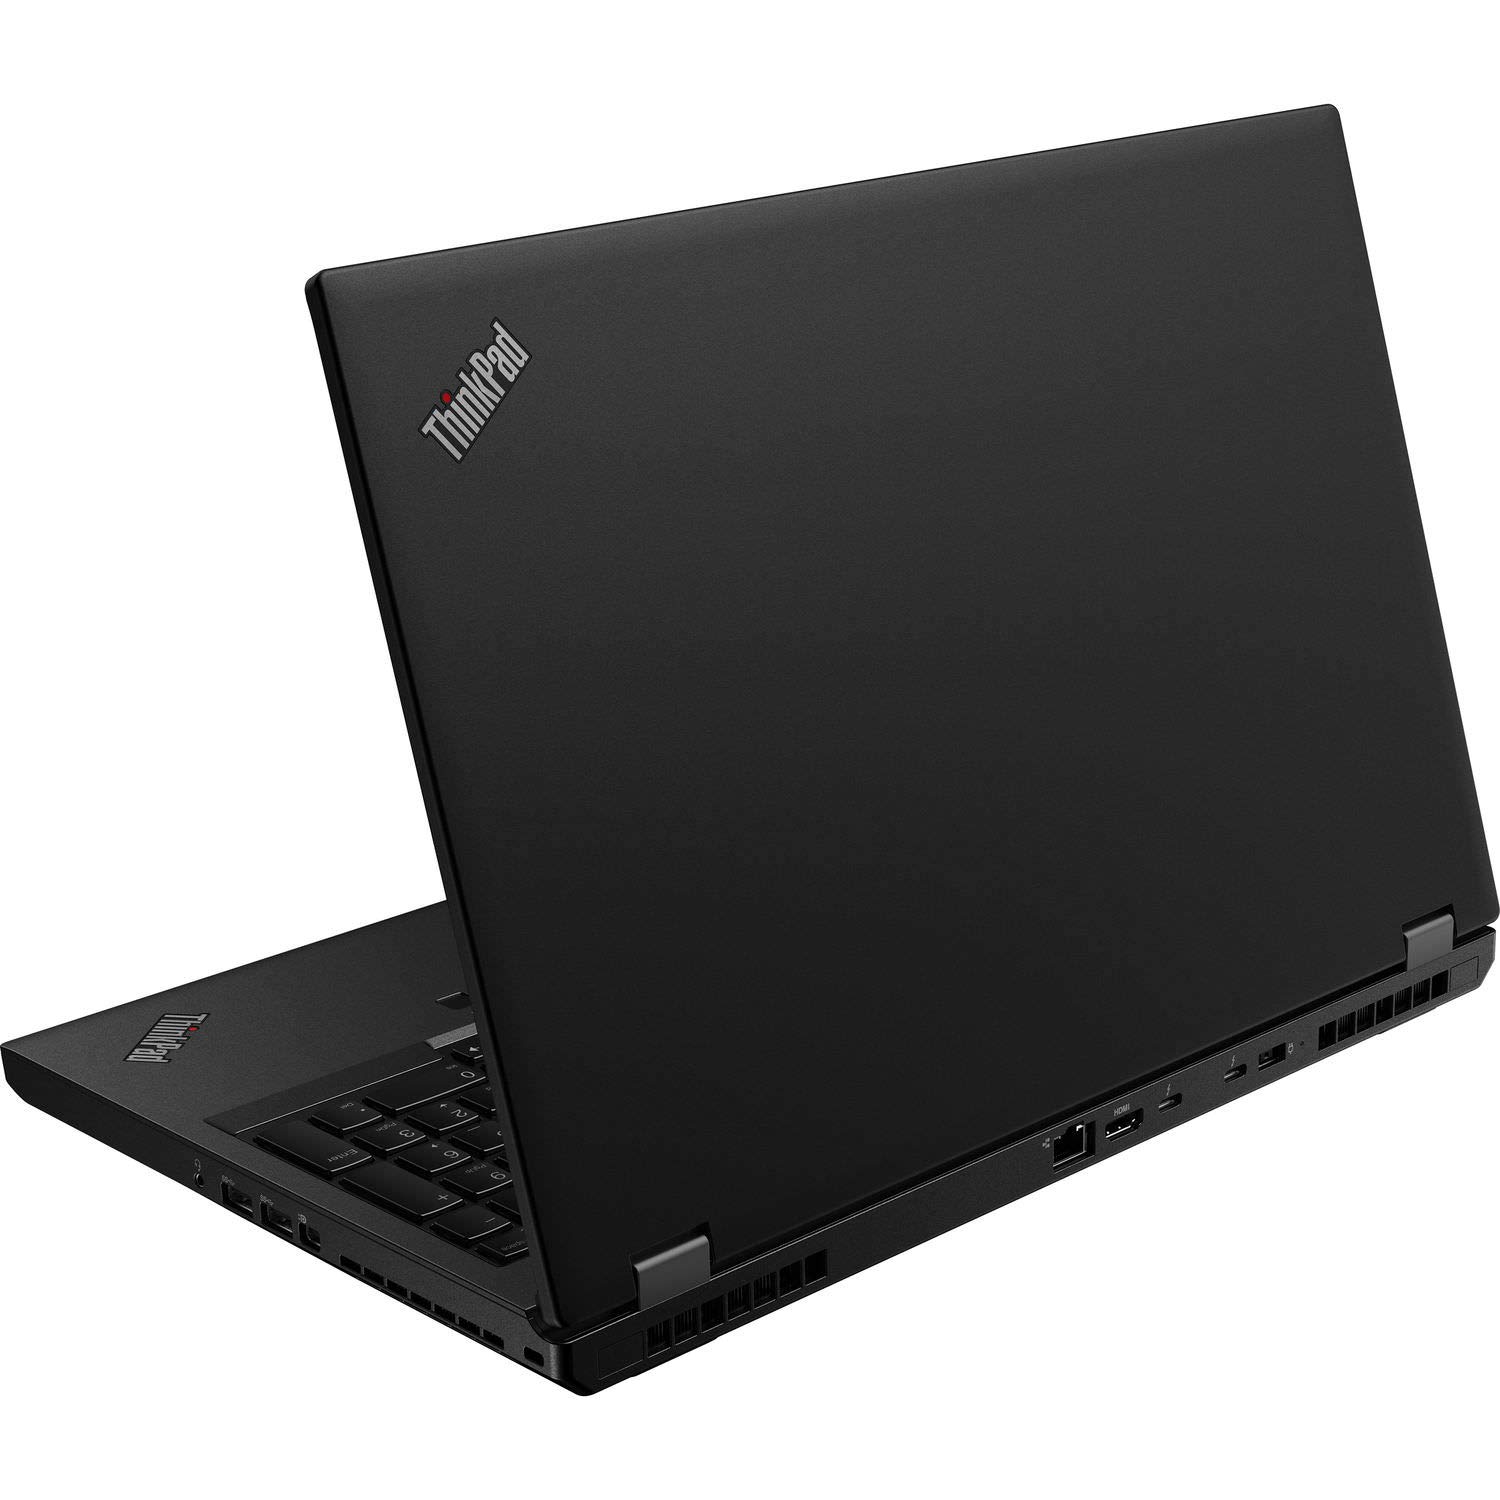 Lenovo New 2018 ThinkPad P52 Workstation Laptop - Windows 10 Pro - Intel Hexa-Core i7-8850H, 64GB RAM, 2TB SSD, 15.6